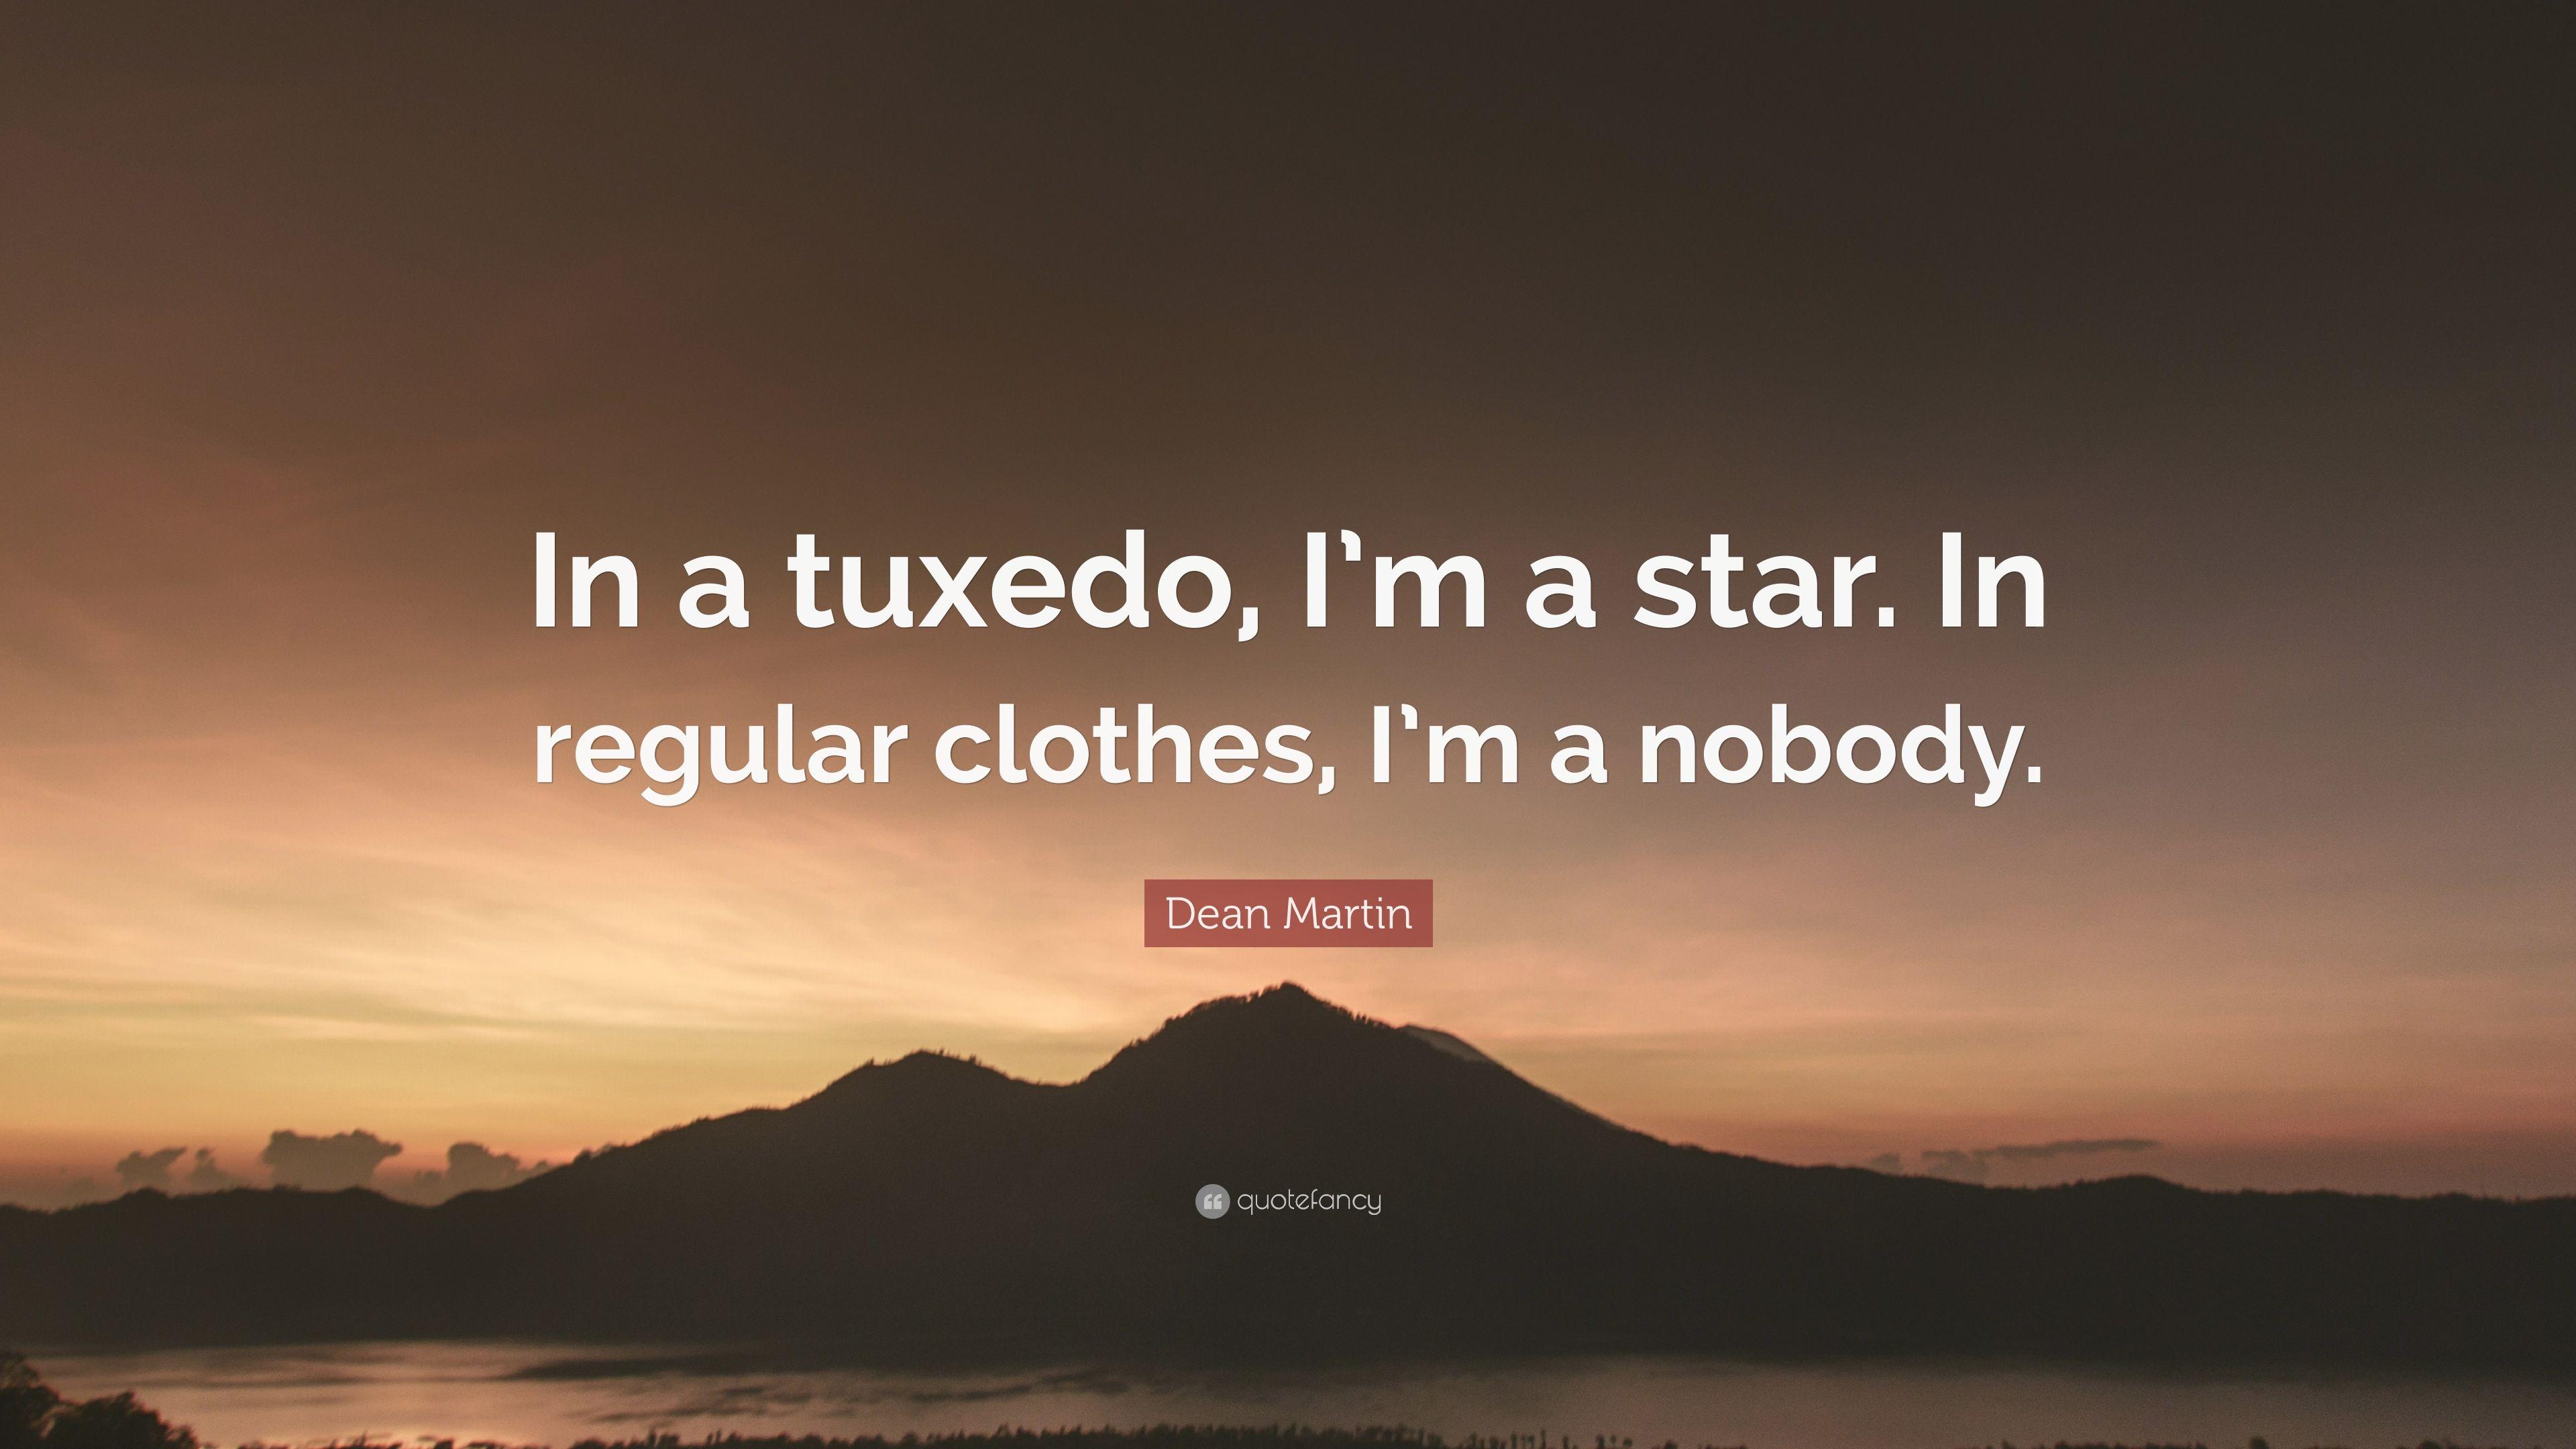 Dean Martin Quote: “In a tuxedo, I'm a star. In regular clothes, I'm